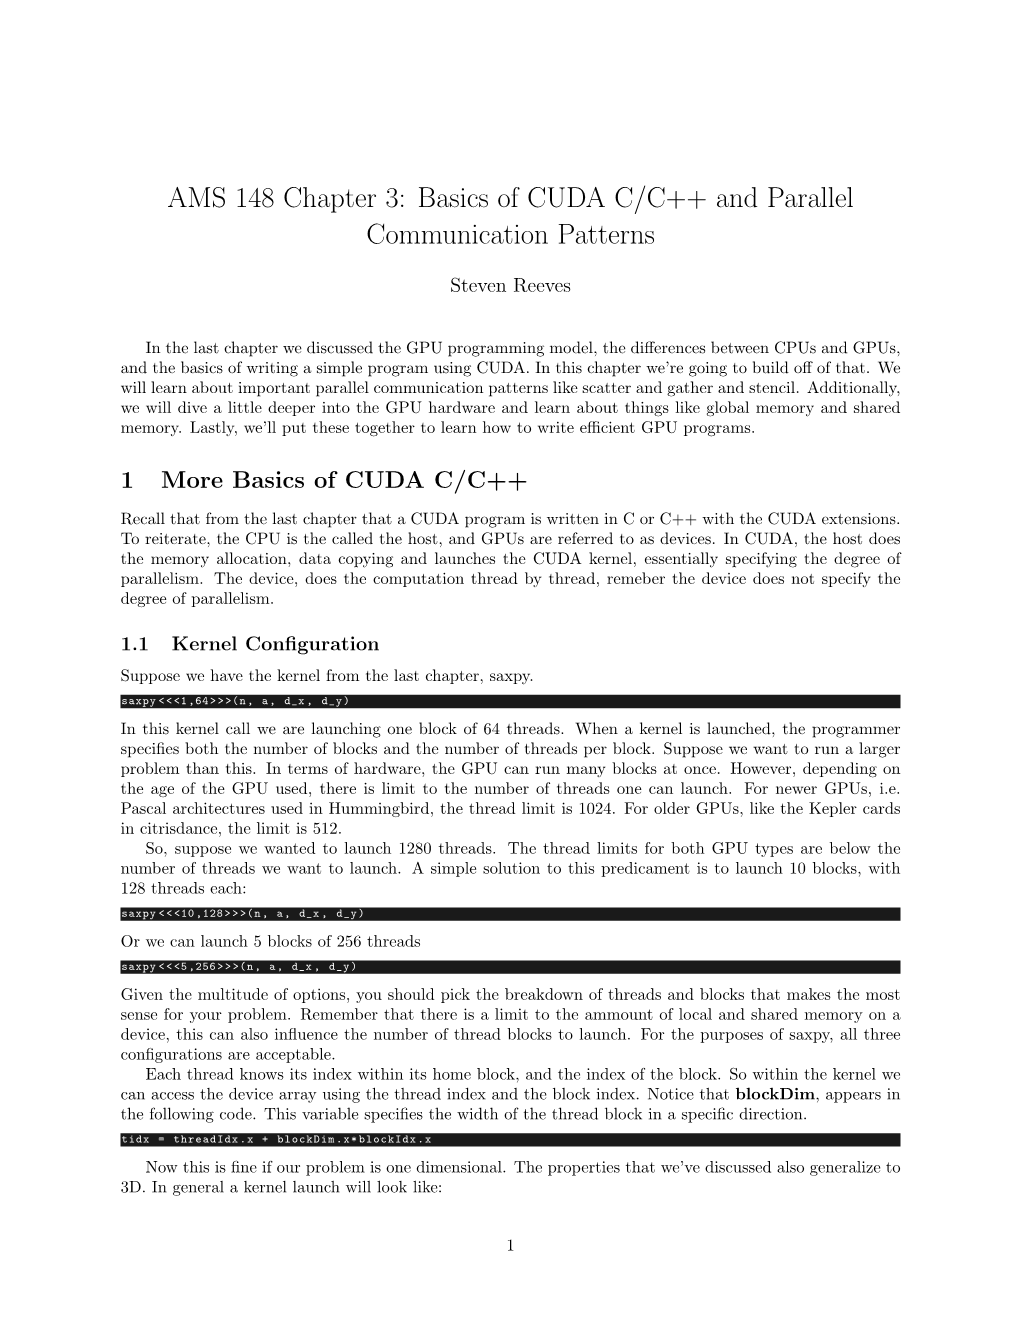 Basics of CUDA C/C++ and Parallel Communication Patterns